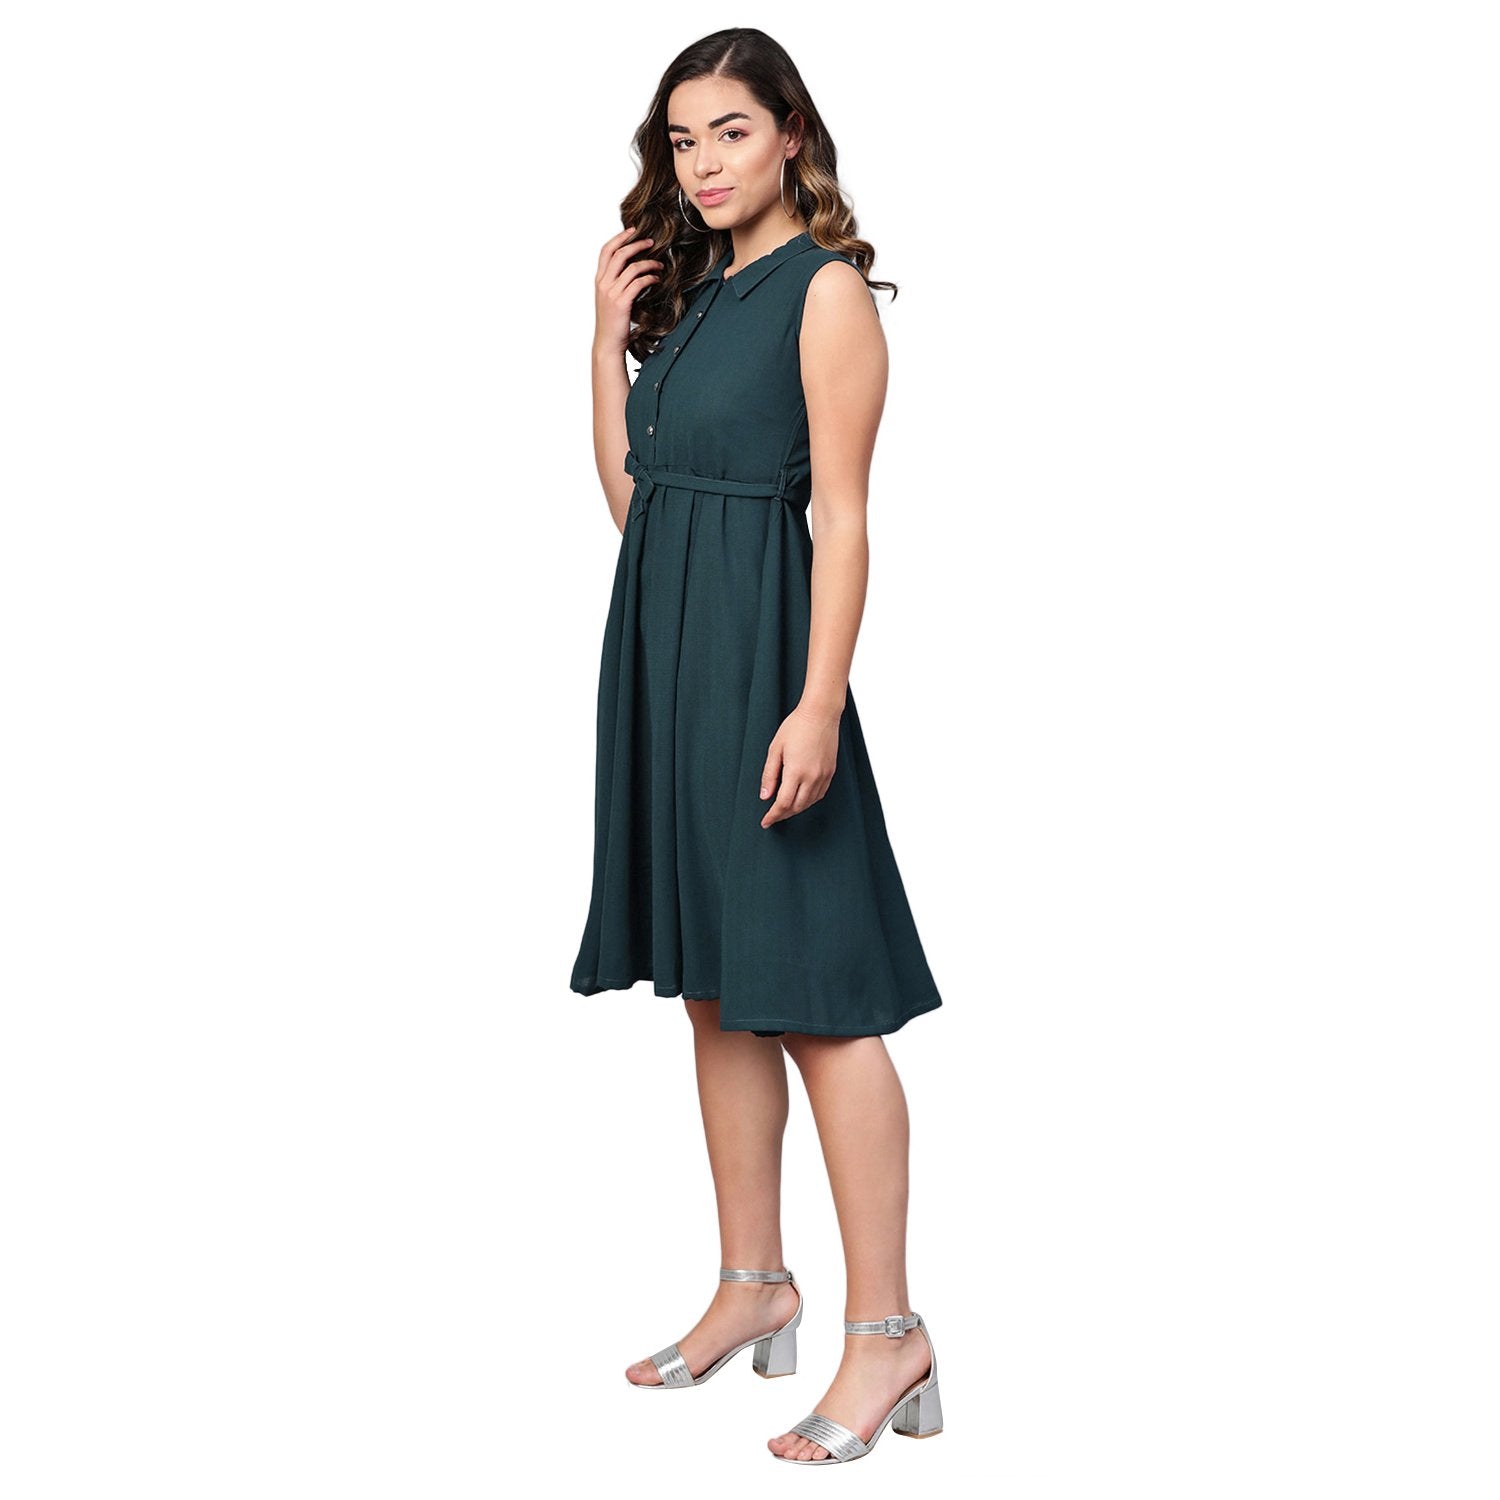 Women's Green Polyester Solid Sleeveless Casual Dress - Myshka